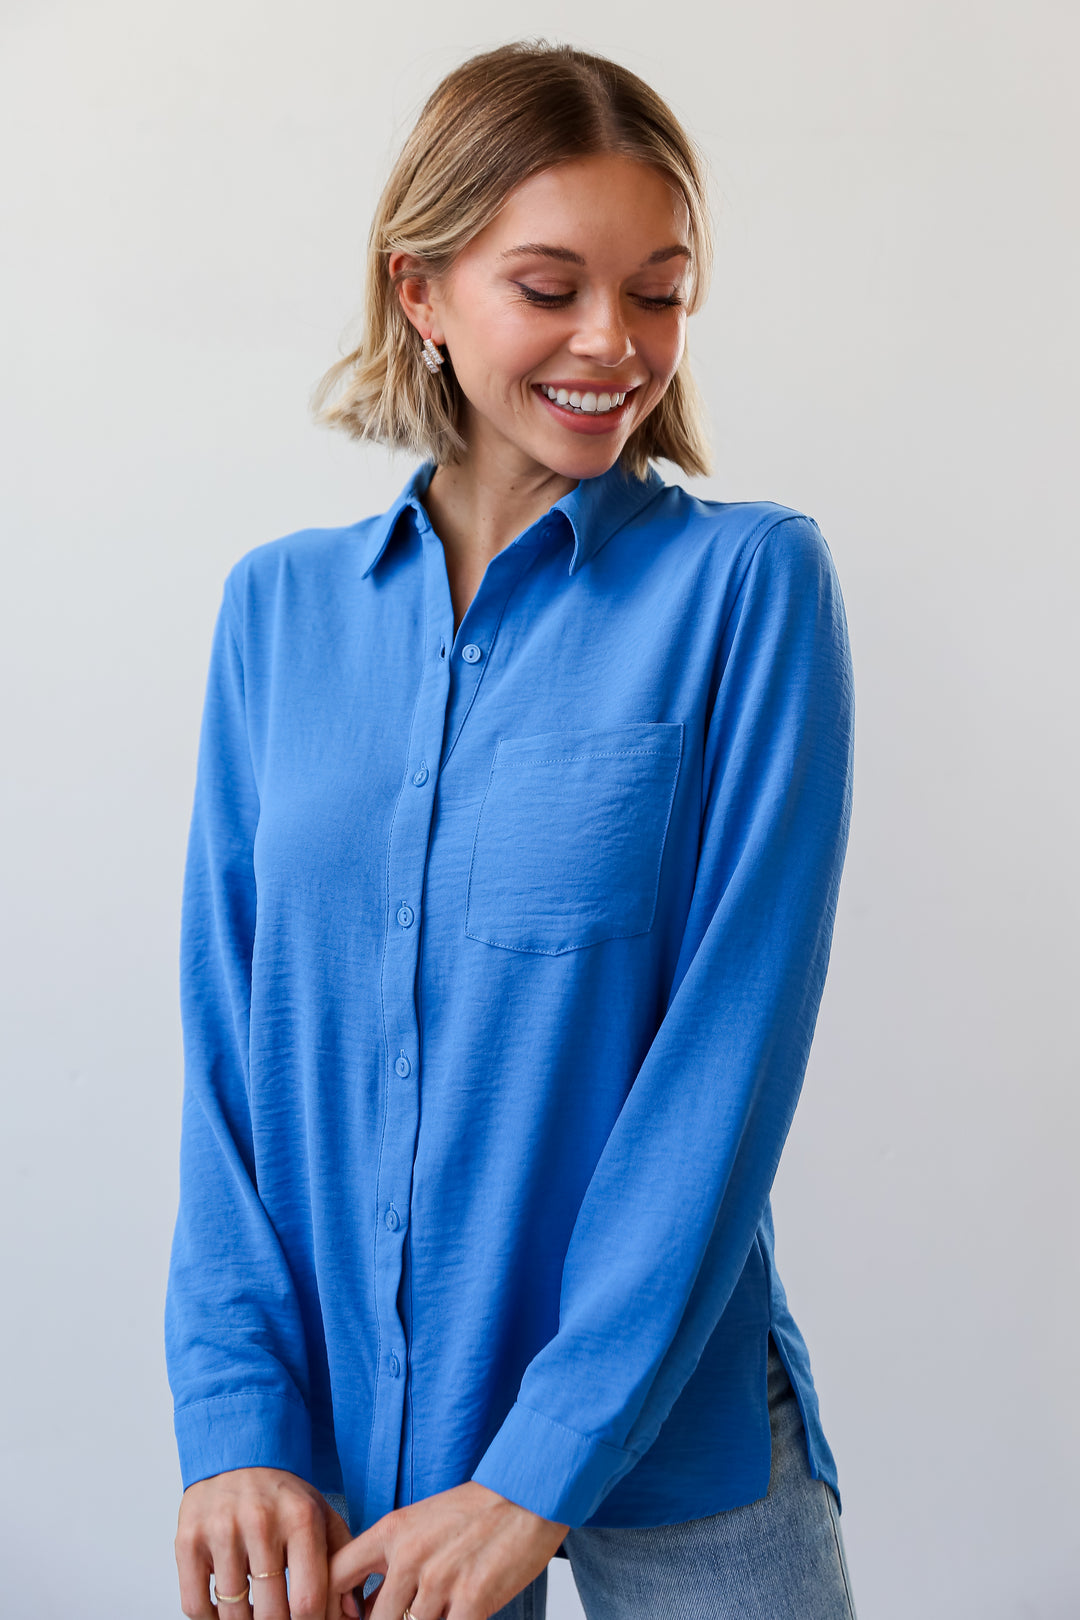 cute blue blouse for women